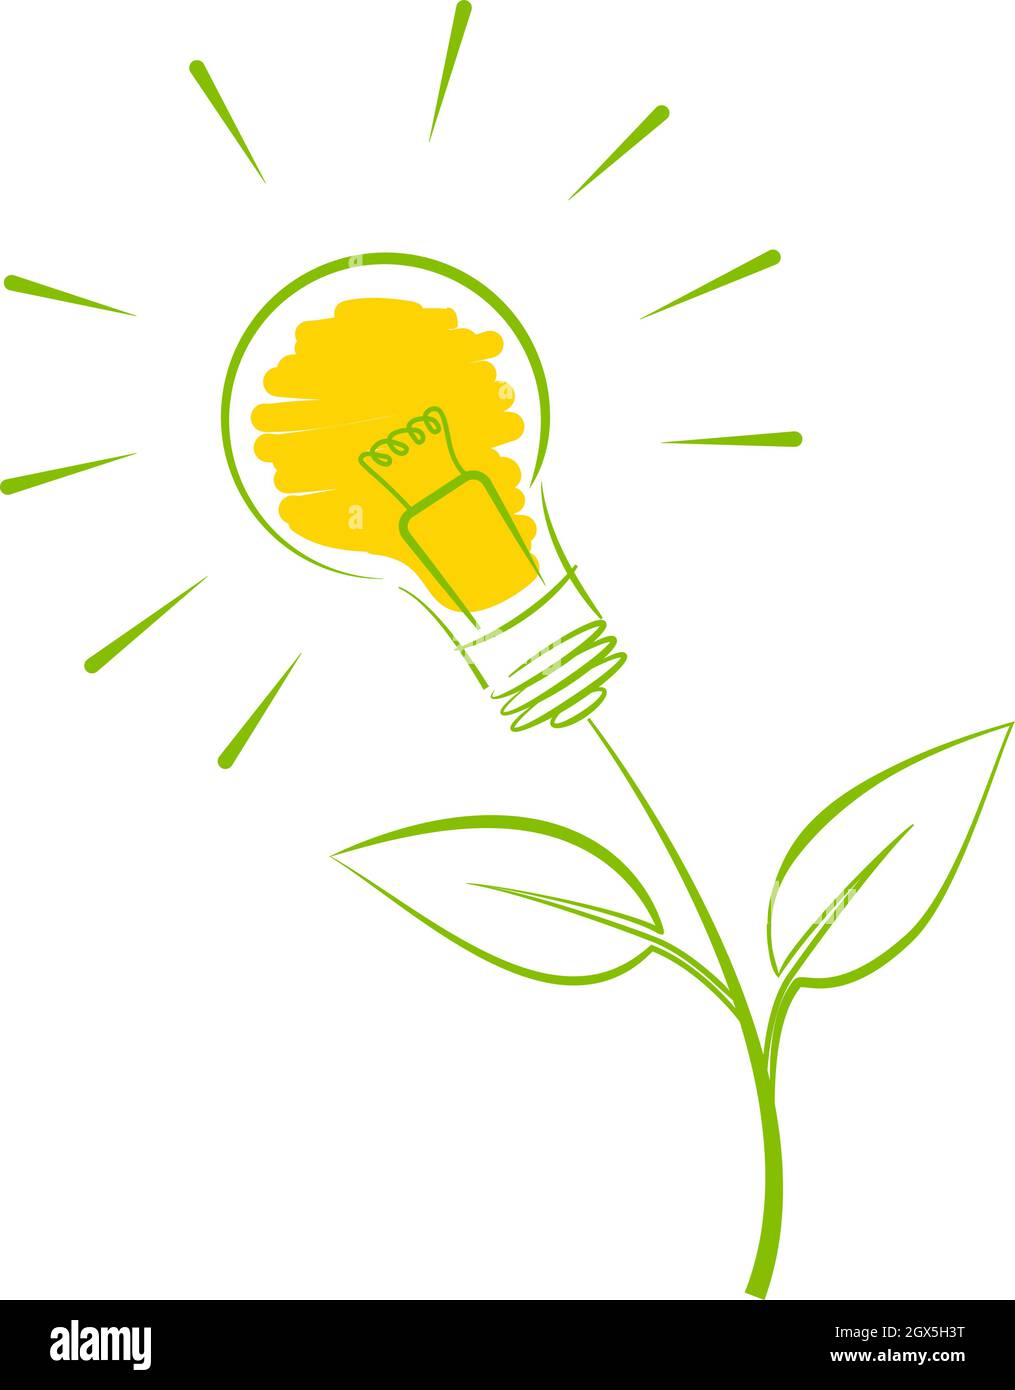 green energy symbol, plant with light bulb vector illustration Stock Vector